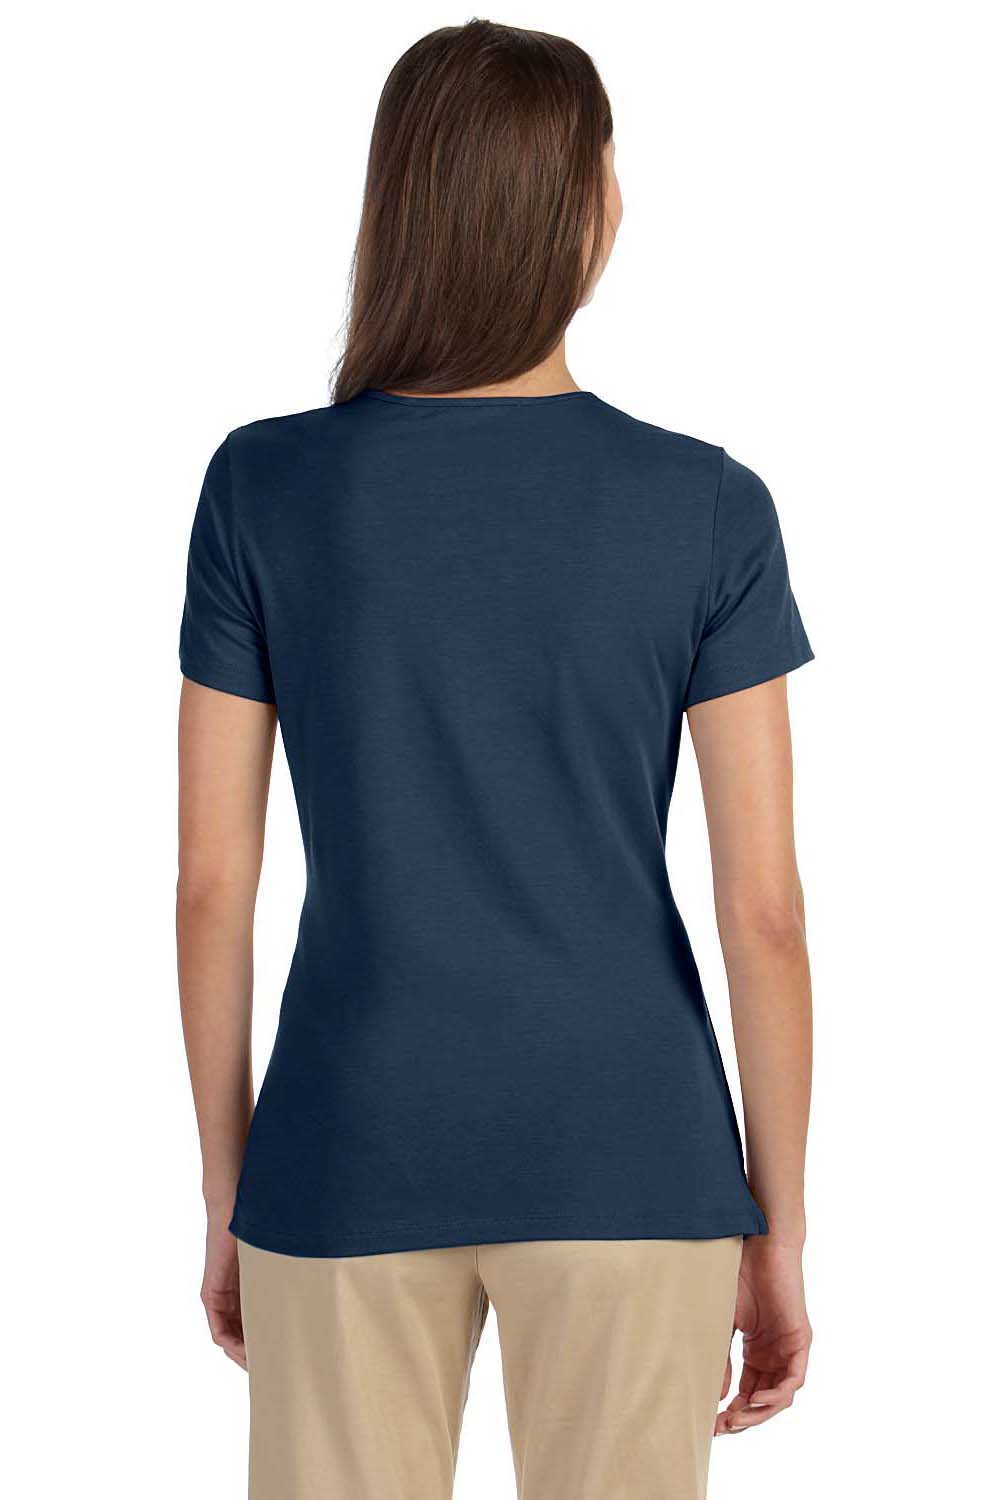 Devon & Jones DP182W Womens Perfect Fit Short Sleeve Crewneck T-Shirt Navy Blue Back